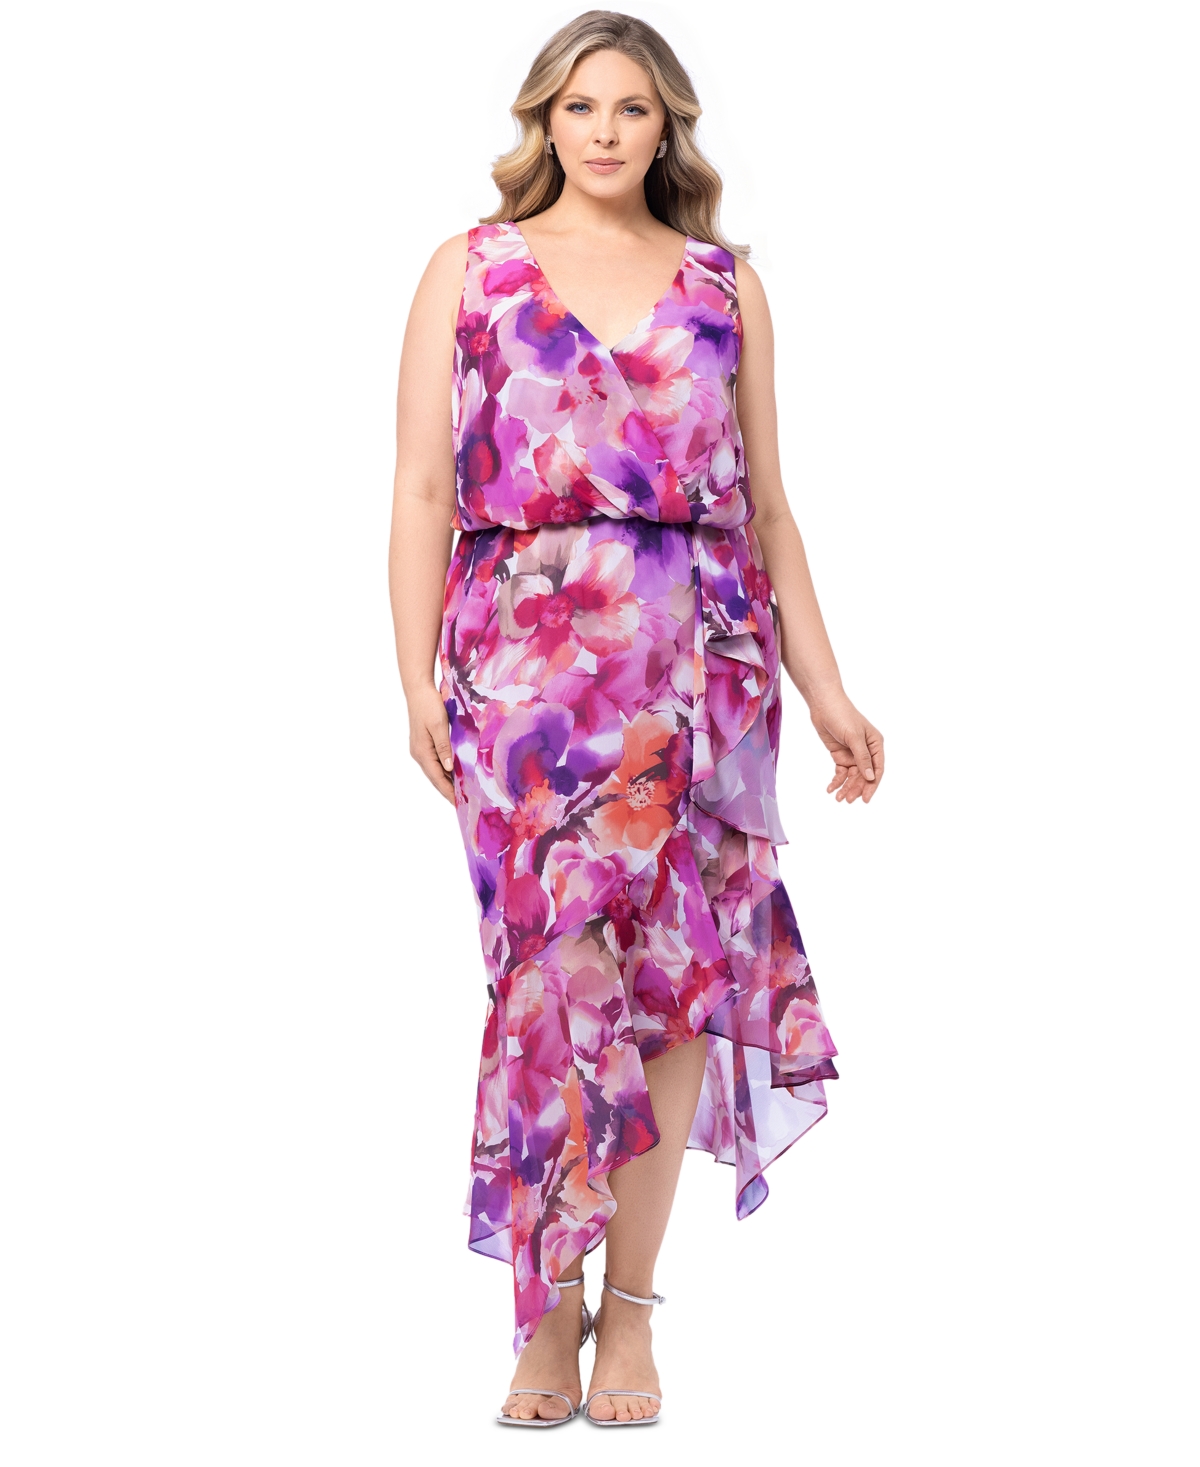 Plus Size Floral Blouson High-Low Dress - Multi